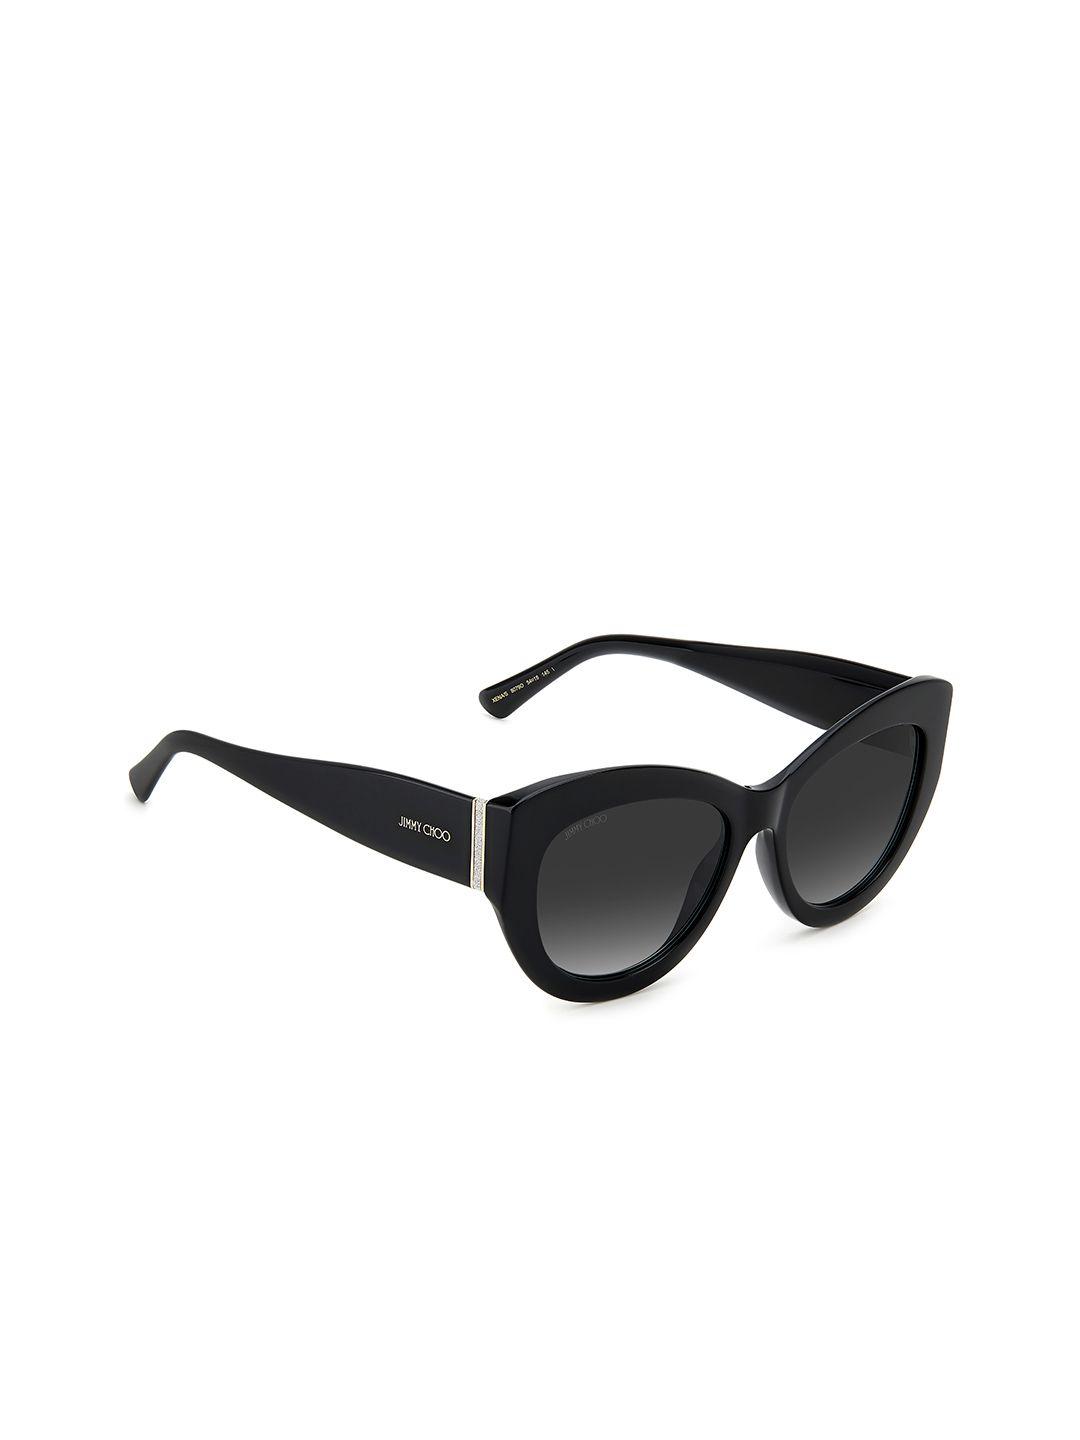 jimmy choo women cateye sunglasses with uv protected lens 205260807549o